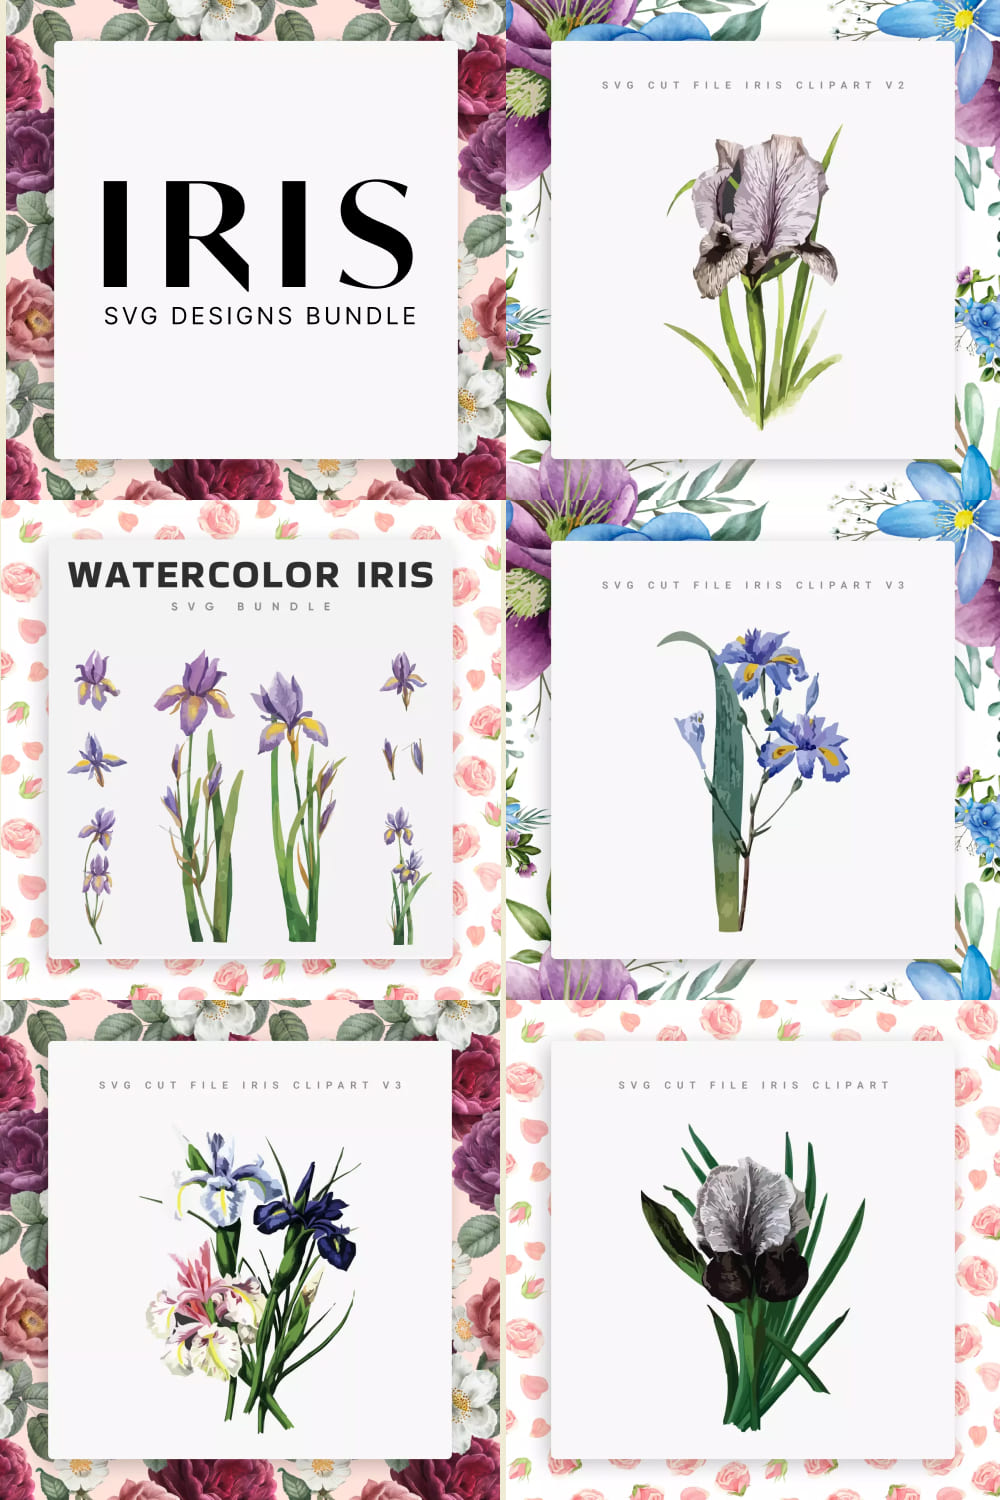 Iris svg designs bundle images of pinterest.